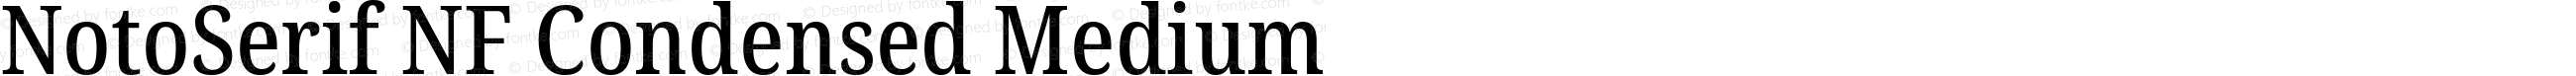 Noto Serif Condensed Medium Nerd Font Complete Windows Compatible